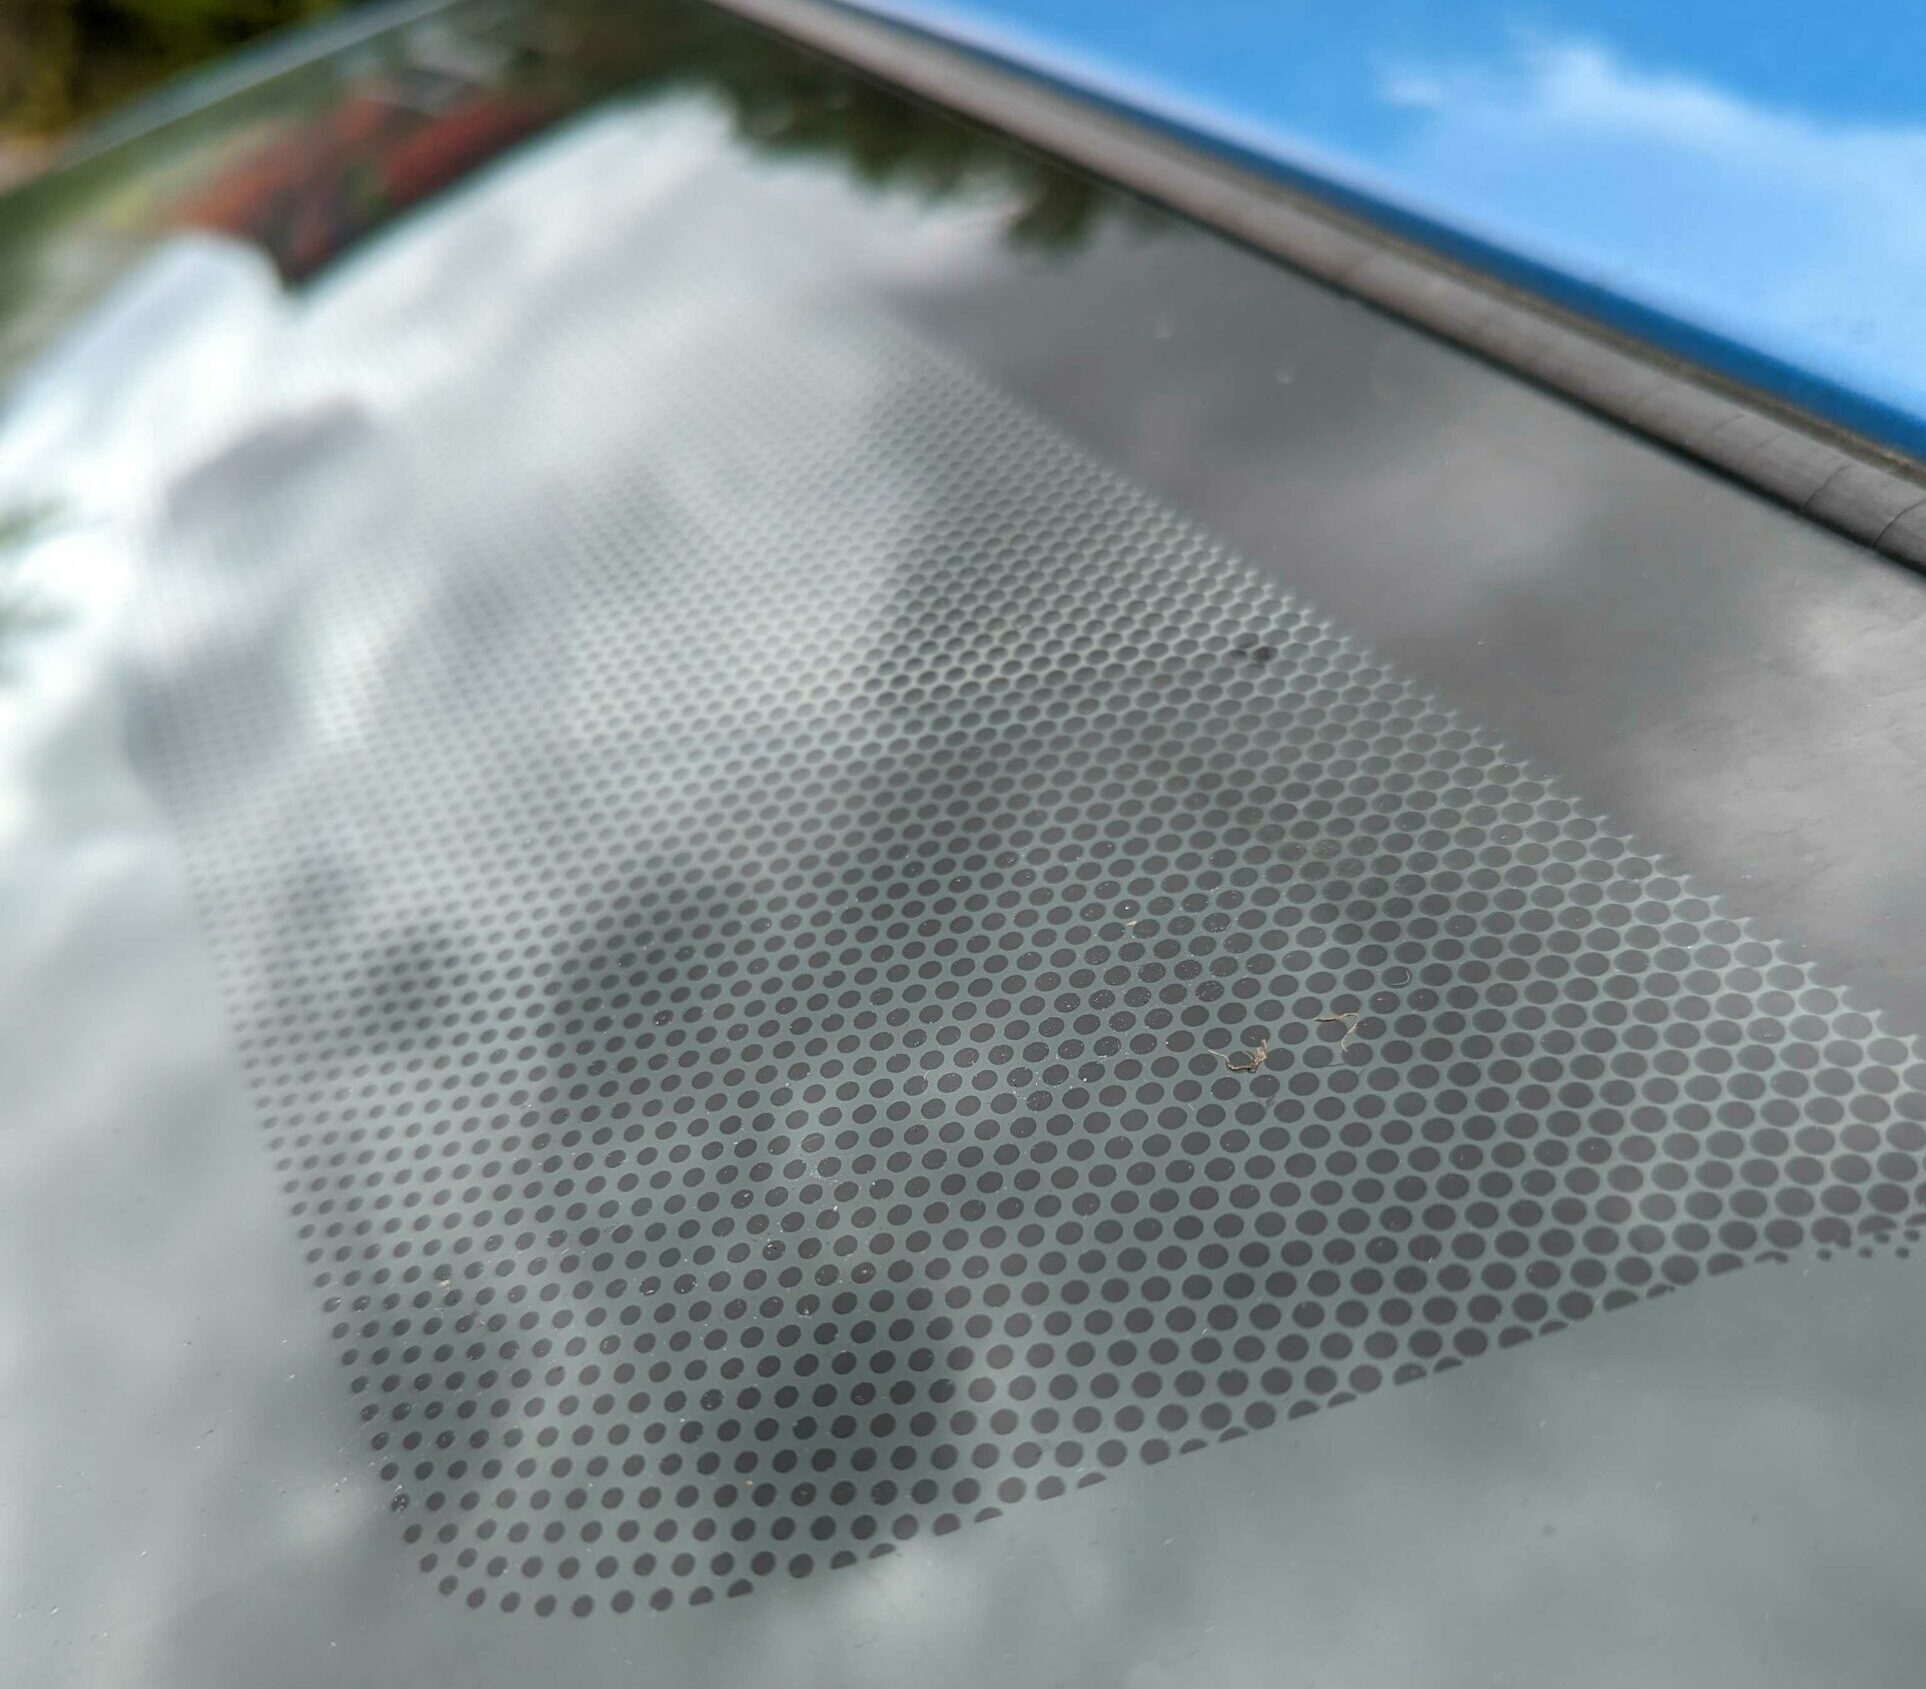 Frit dots on car's windshield, blue car